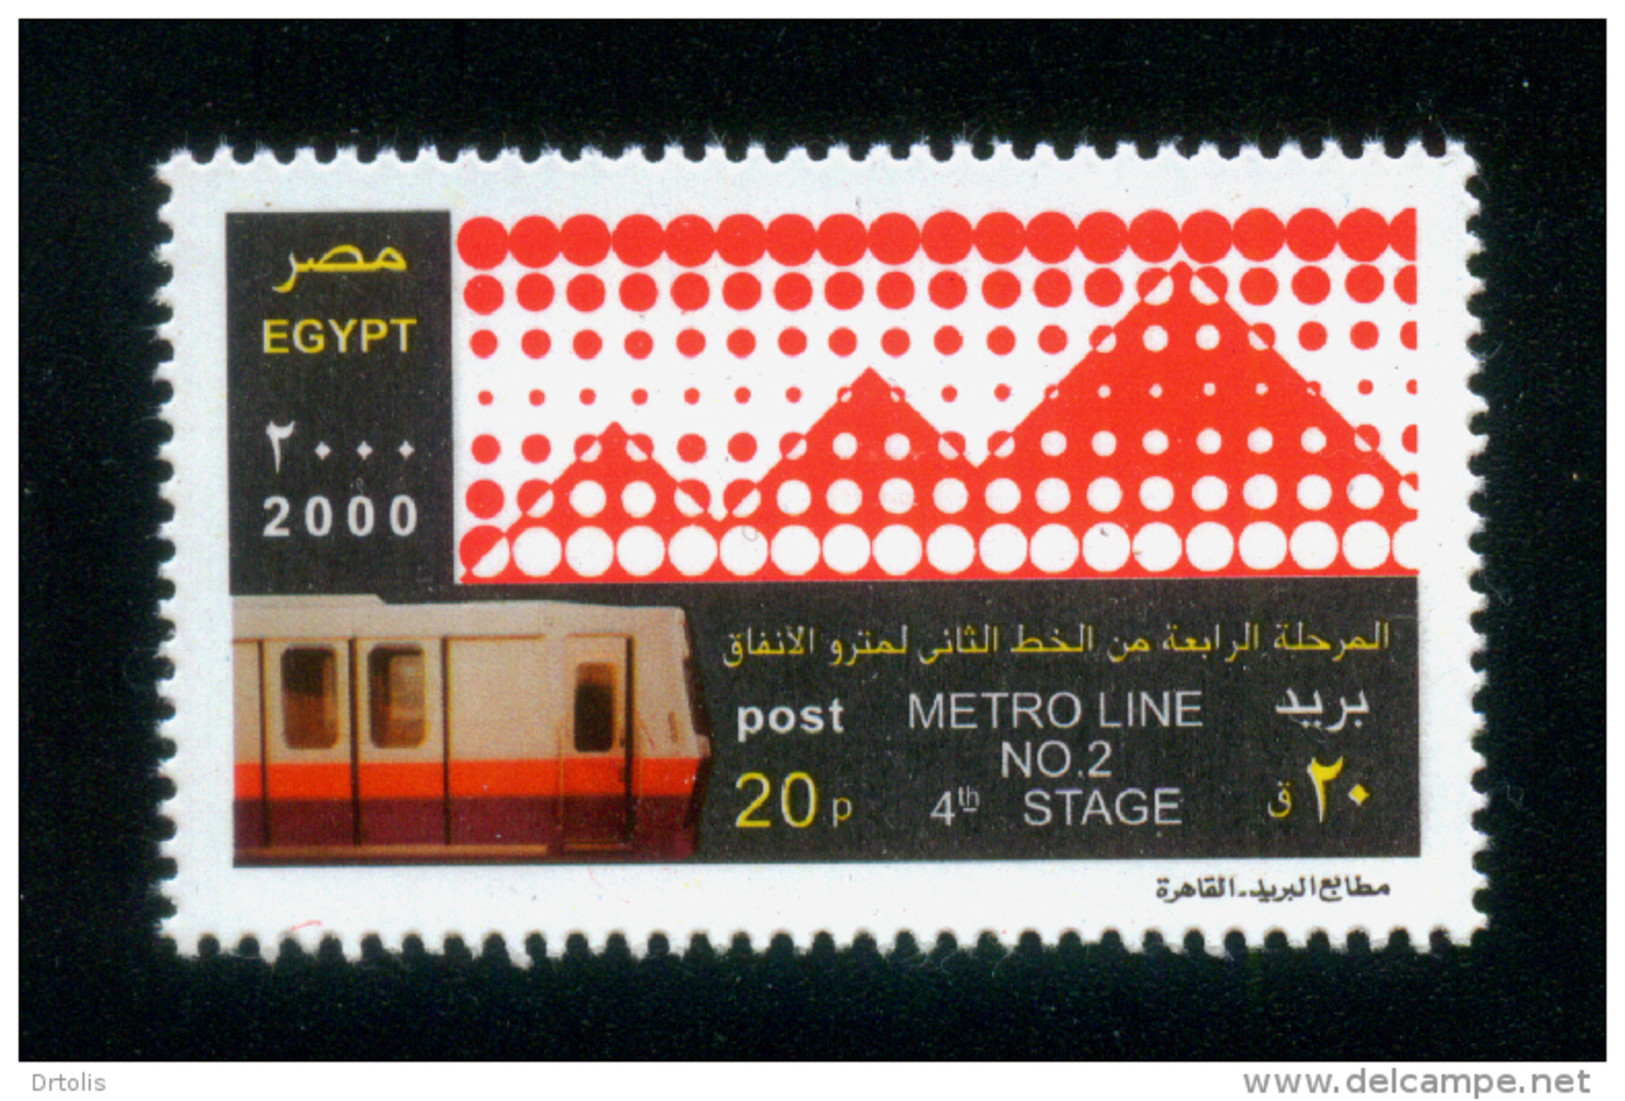 EGYPT / 2000 / CAIRO AUBWAY LINE / METRO / TRAIN / PYRAMIDS / MNH / VF - Nuevos